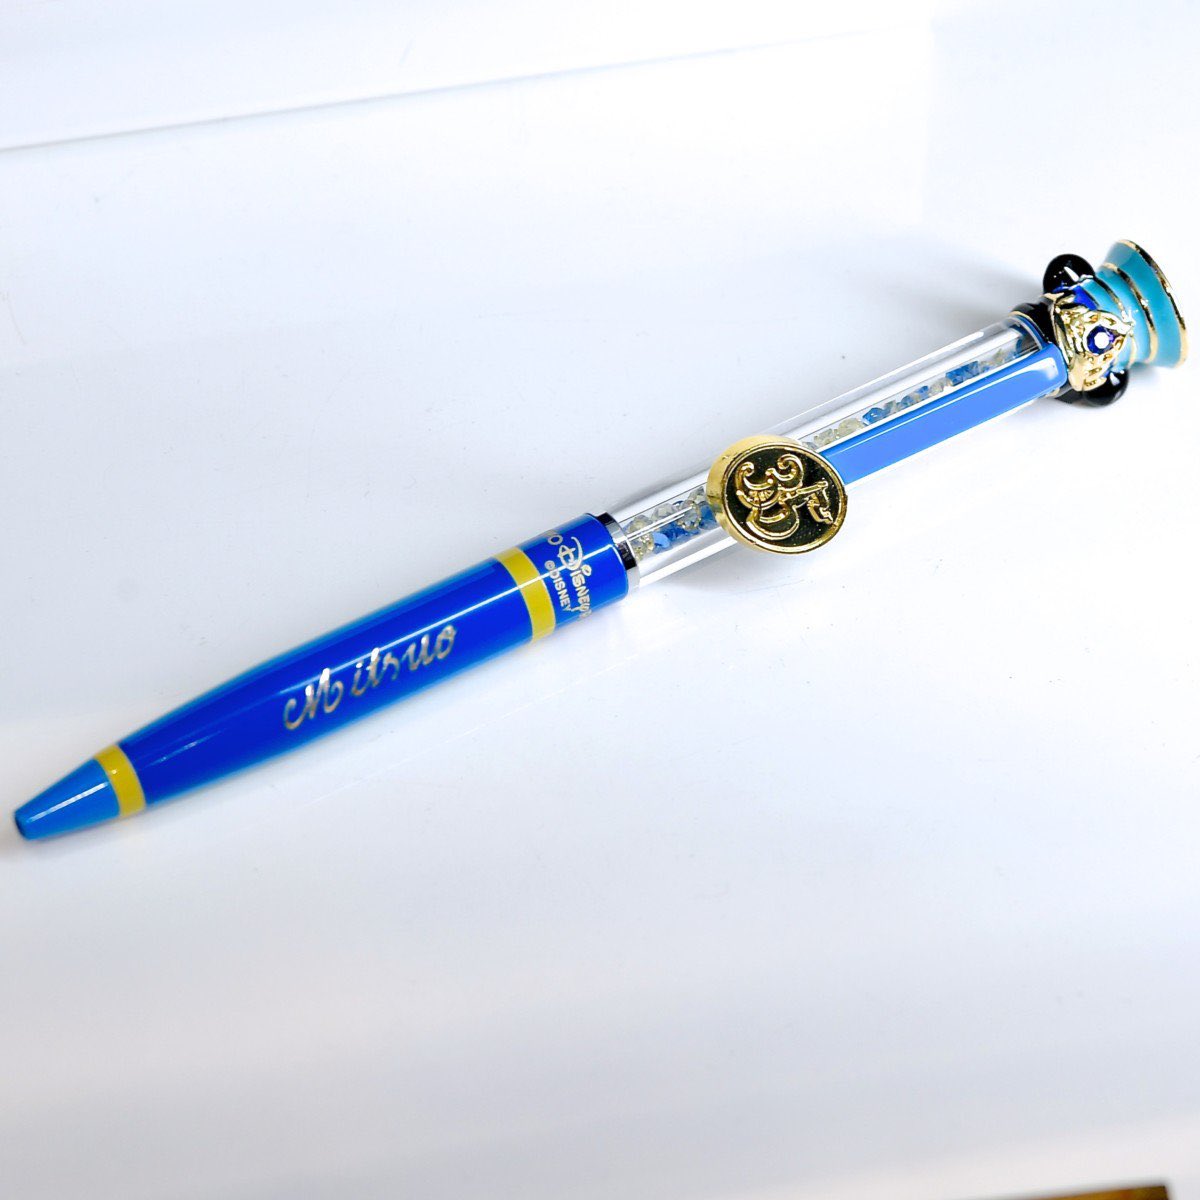 Mezzomikiのディズニーブログ 35周年デザイン 東京ディズニーリゾート 名入れボールペン ミッキー ミニーの ボールペン再販中です T Co 71imnfe7wg